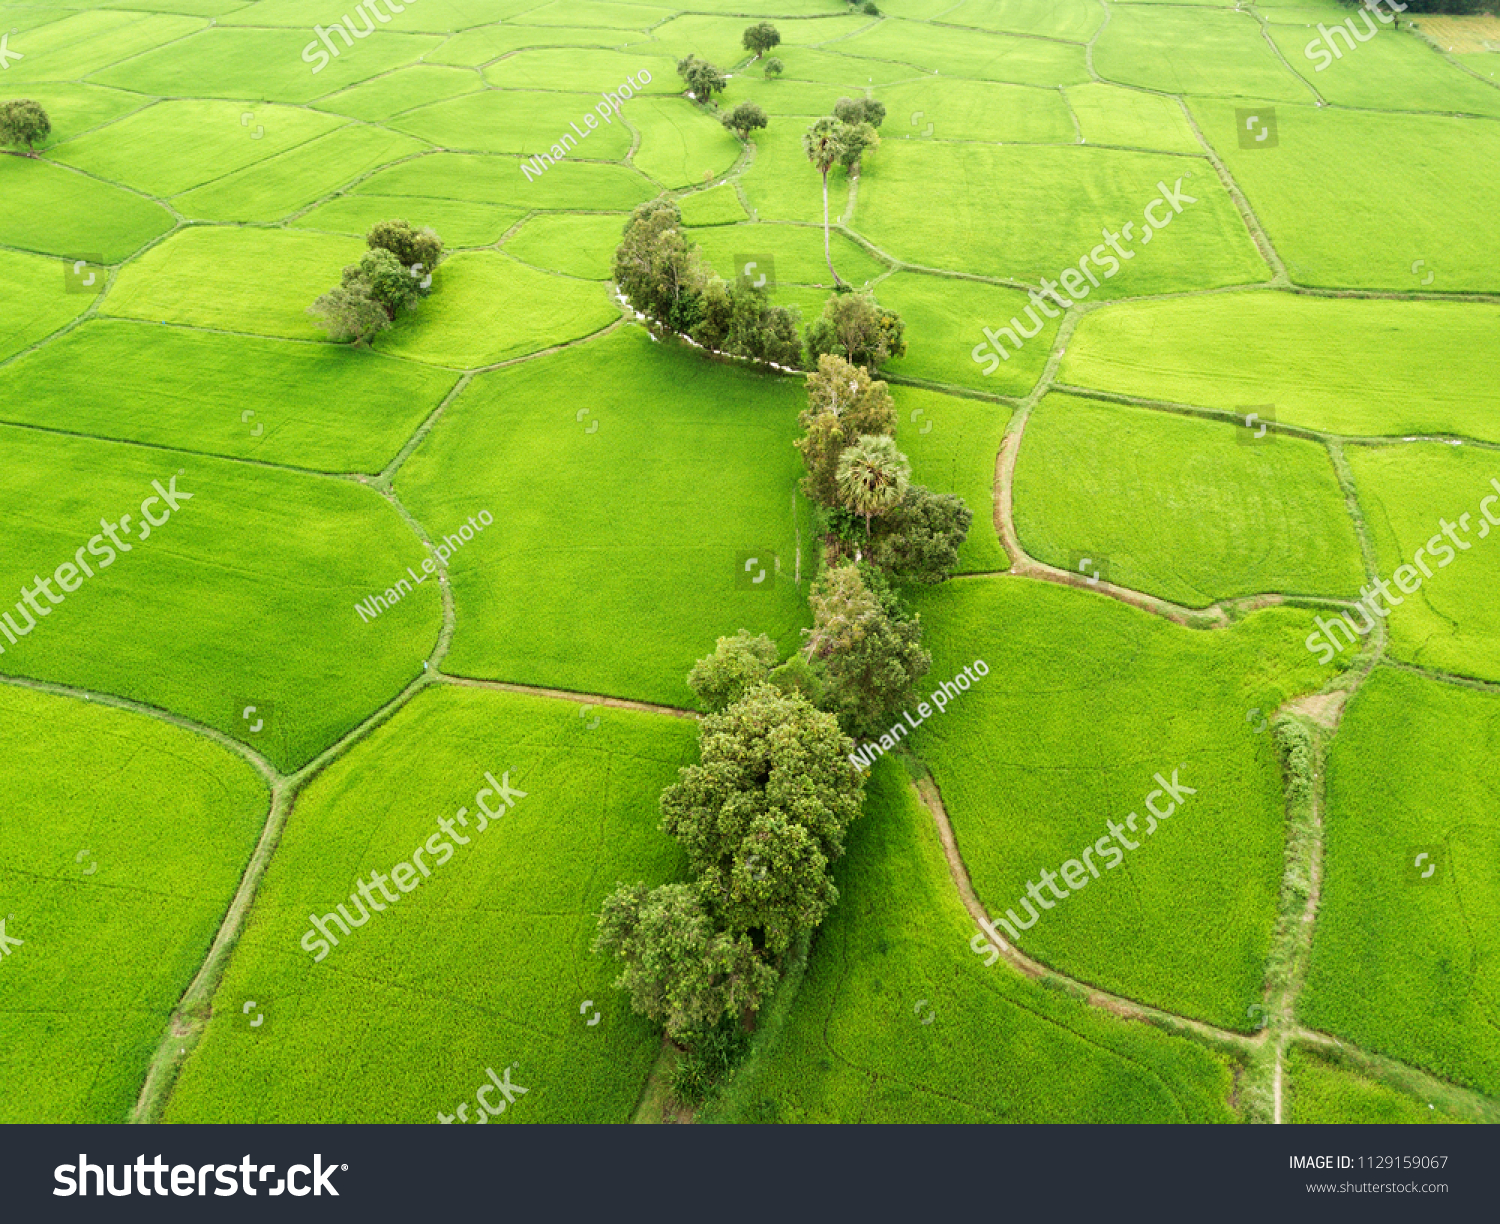 Green rice fields in the mekog delta #1129159067